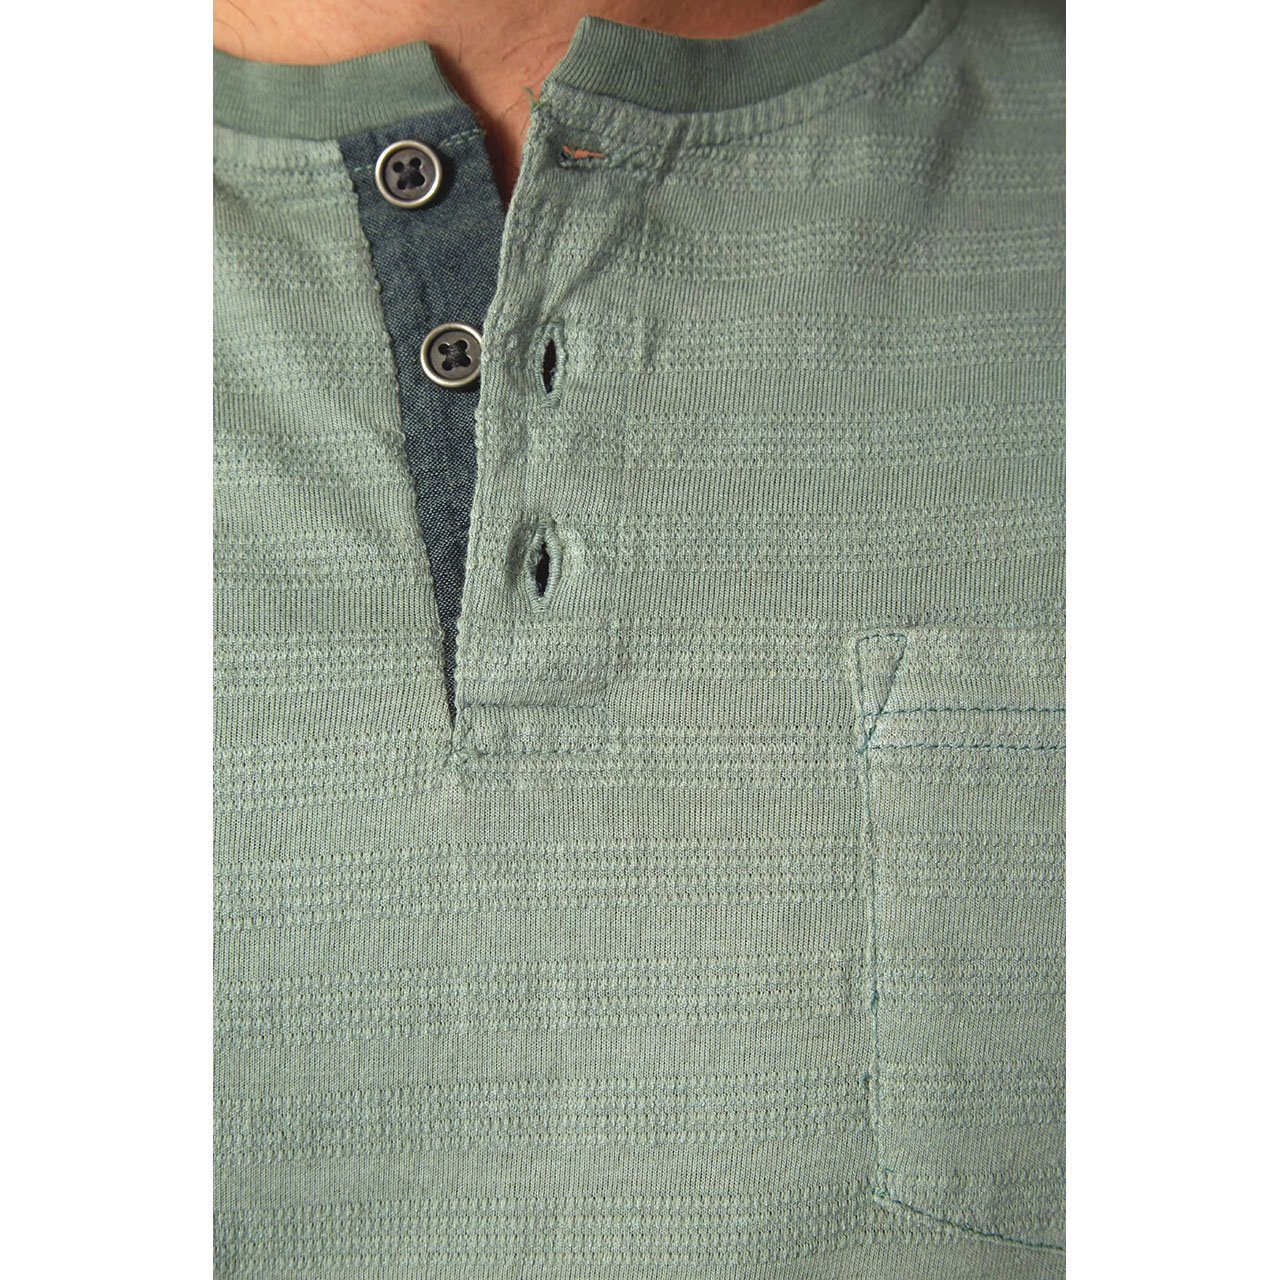 Green Striped Men's Henley T-Shirt close up of neck